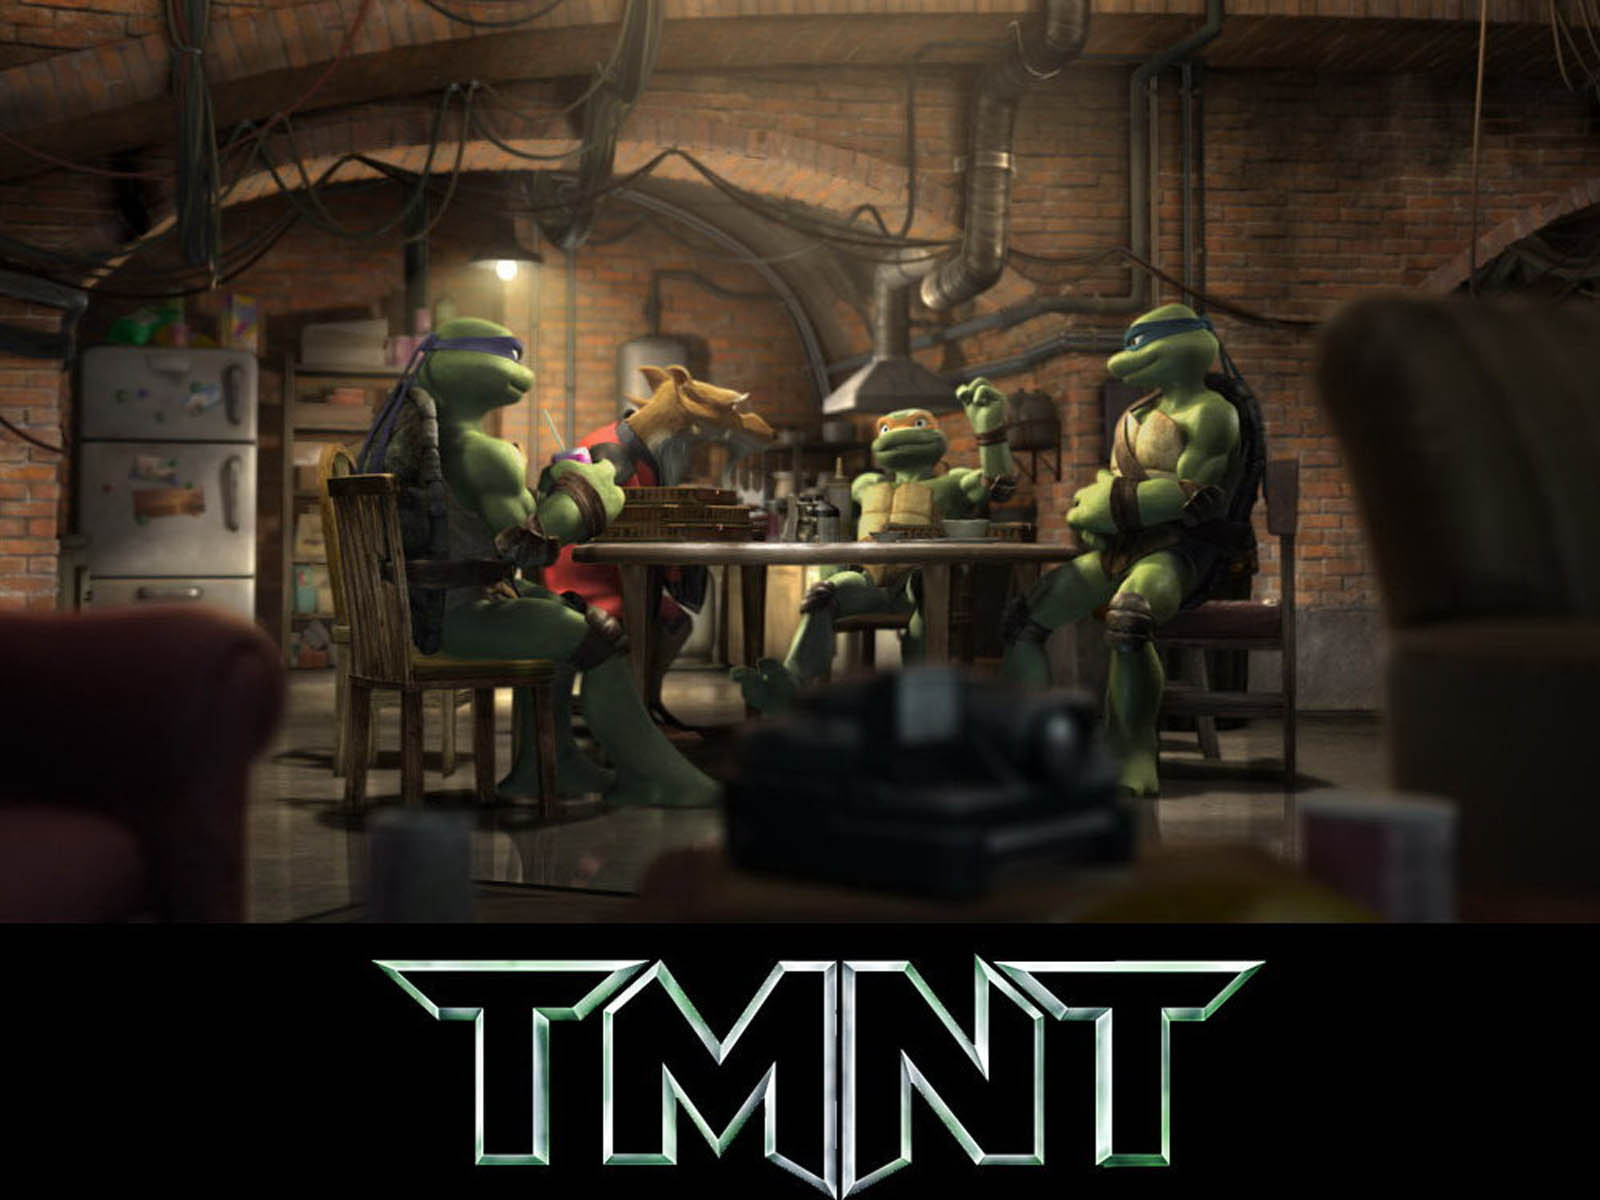 Teenage Mutant Ninja Turtles Dvdrip Xvid Movie Torrentz Movie Torrentz